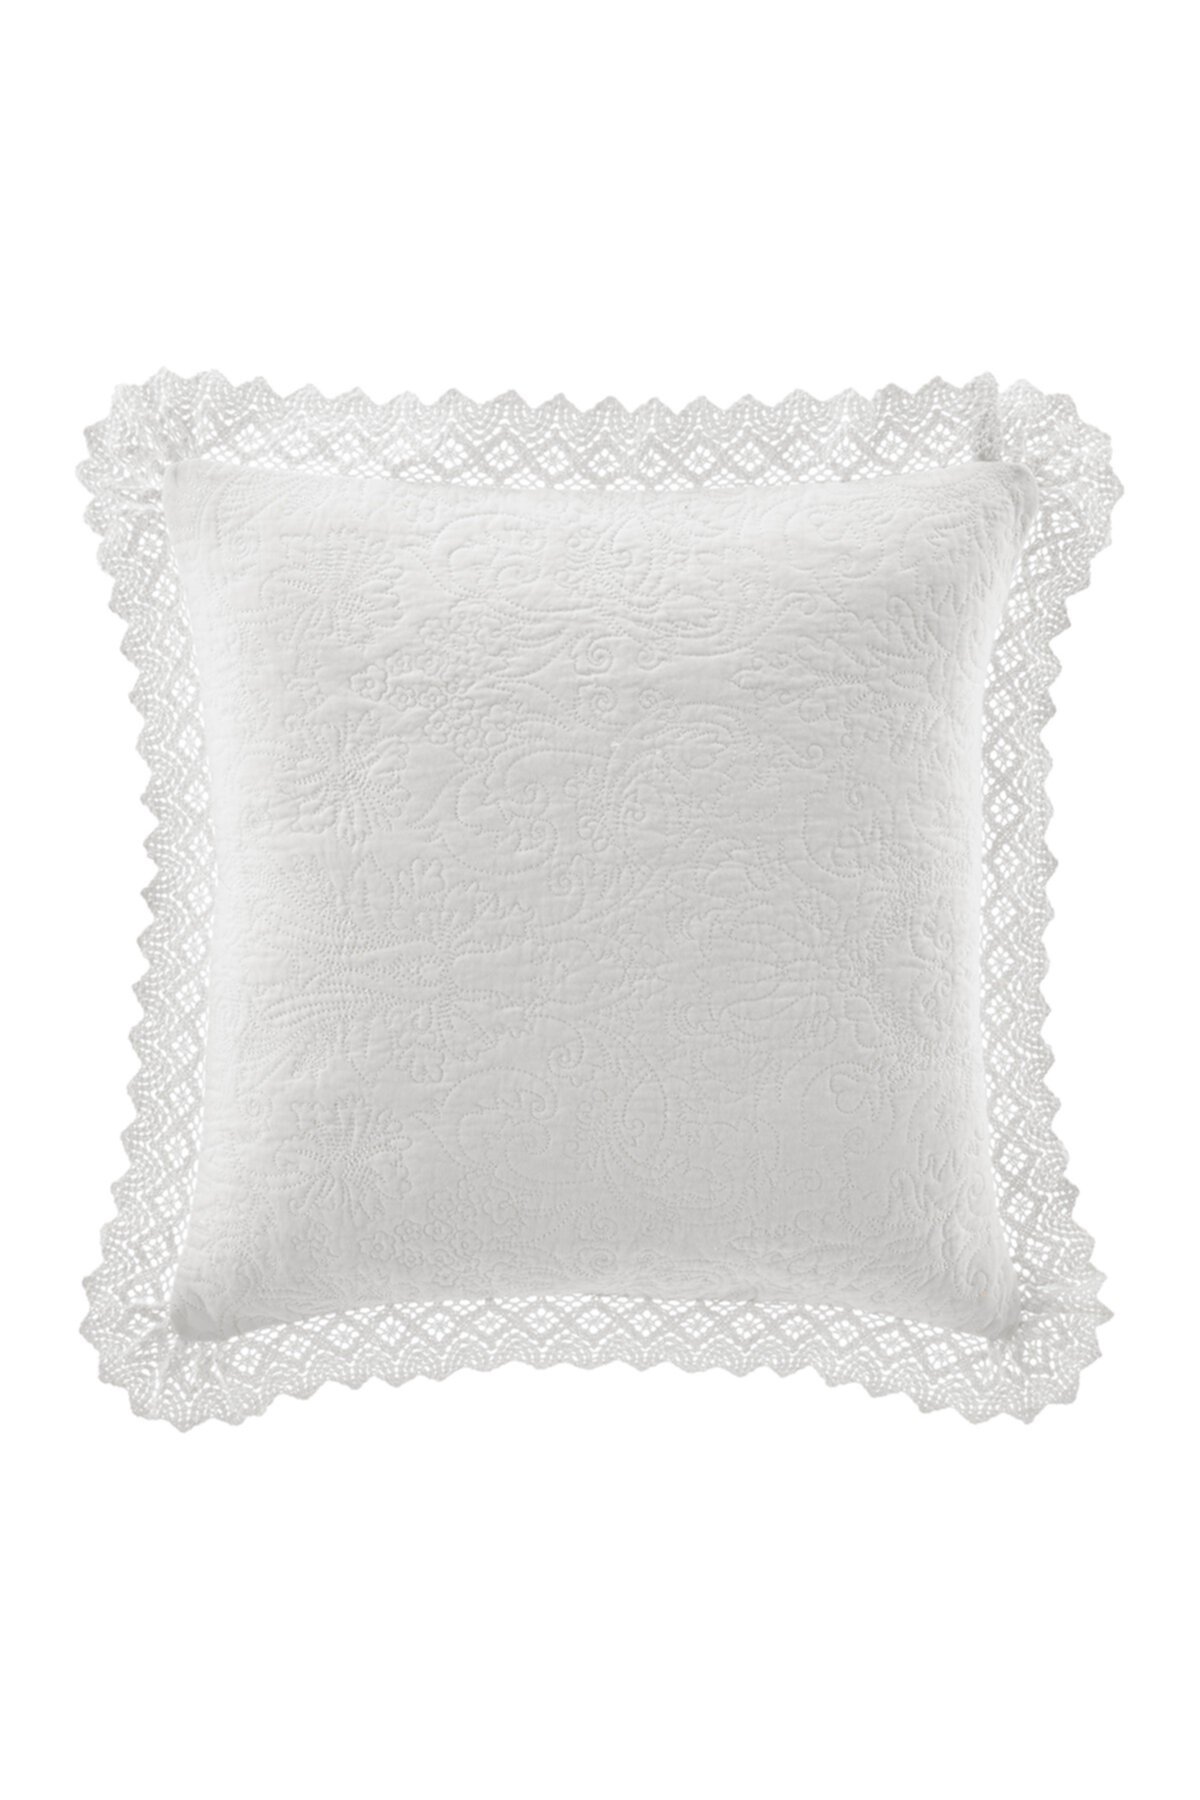 Solid White Crochet 16" X 16" Decorative Pillow Laura Ashley